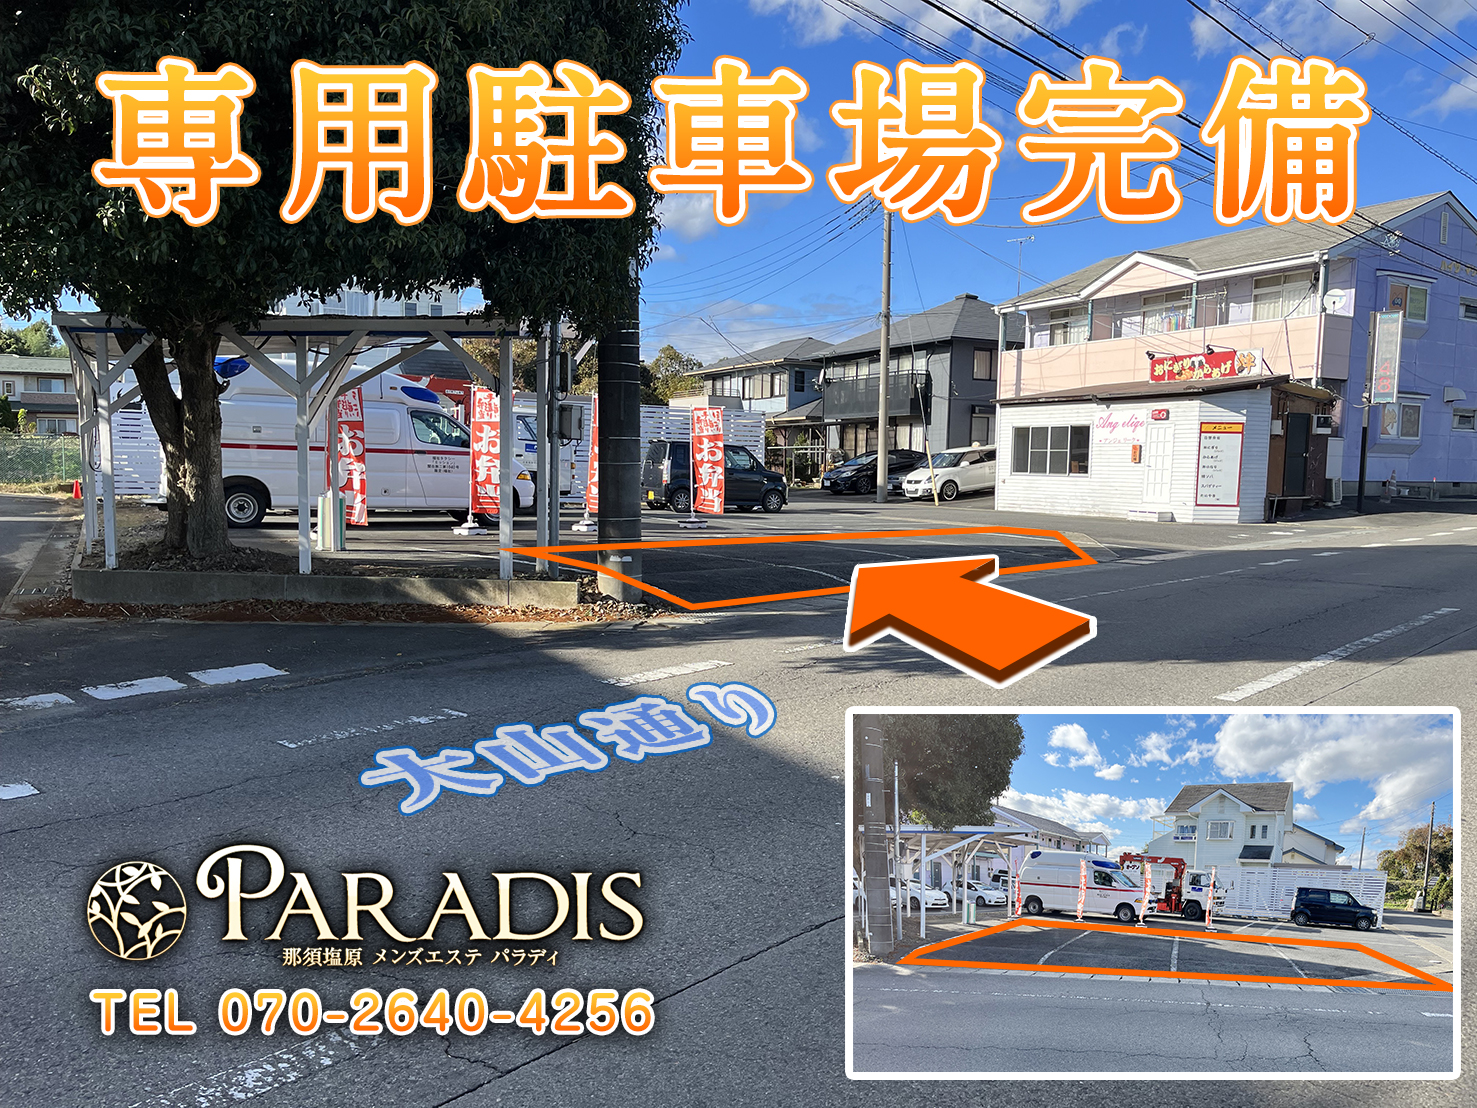 Pardis-パラディ-専用駐車場NET